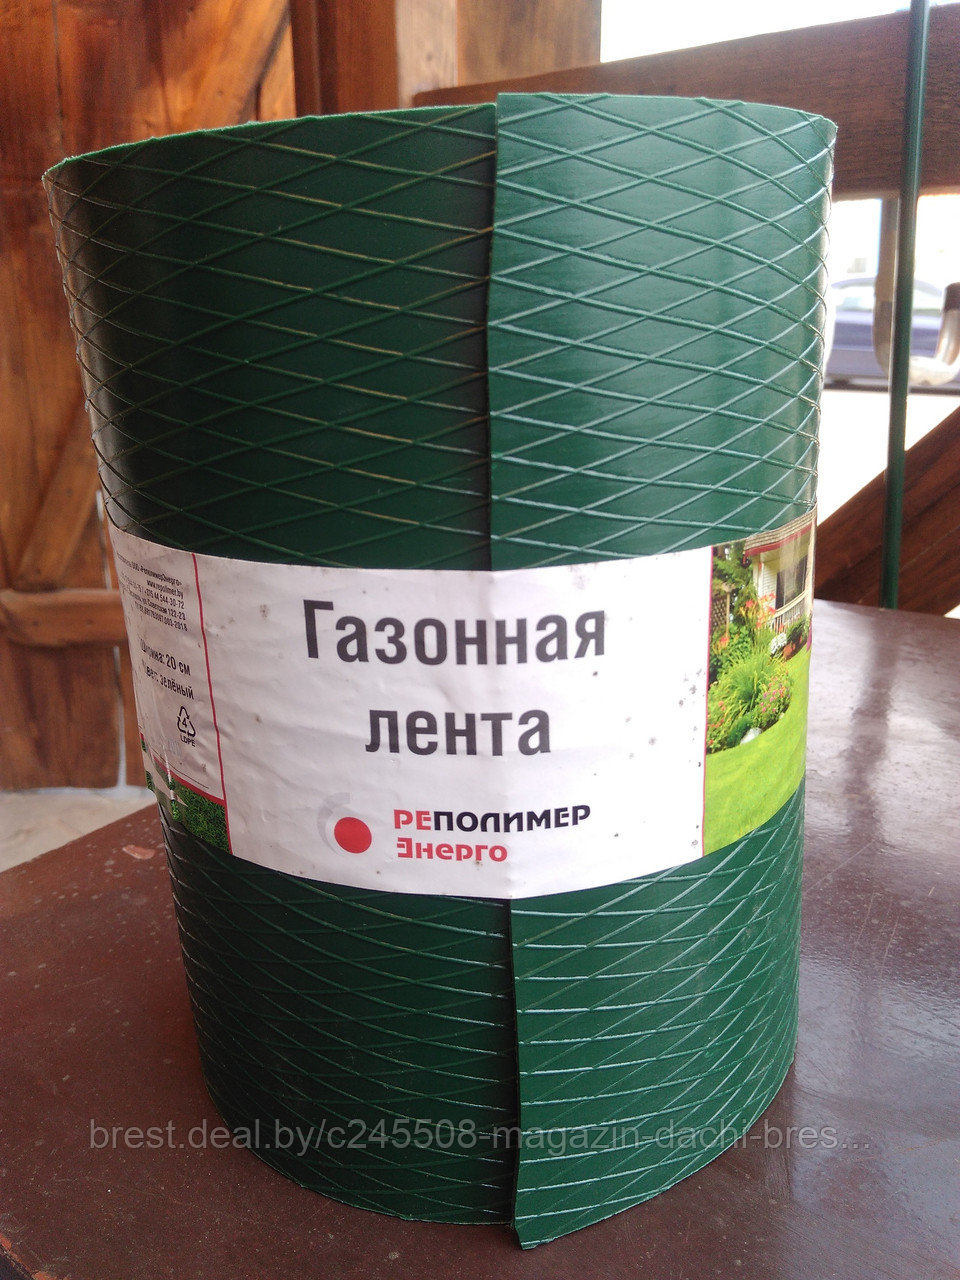 Бордюрная лента Зеленая 20 см х 9 м, толщина 1,7 мм, Беларусь, фото 1